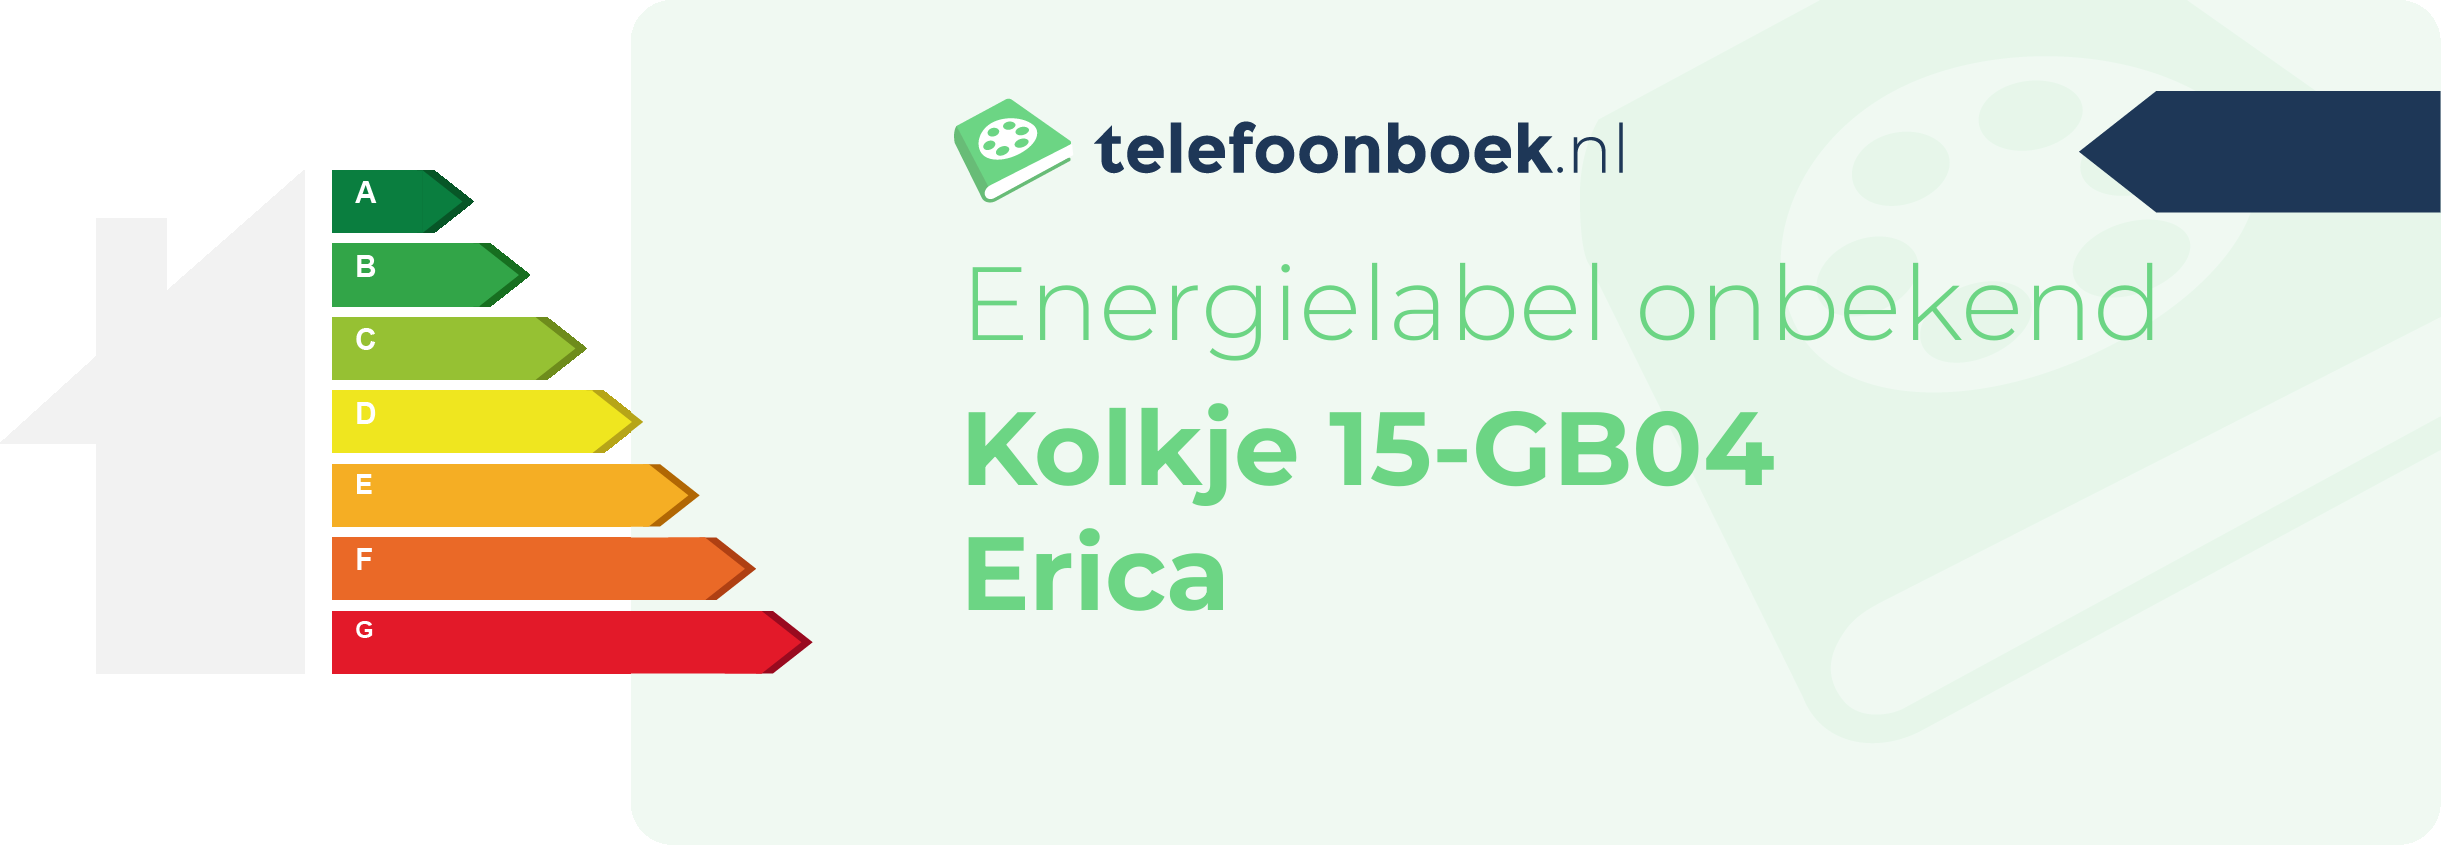 Energielabel Kolkje 15-GB04 Erica